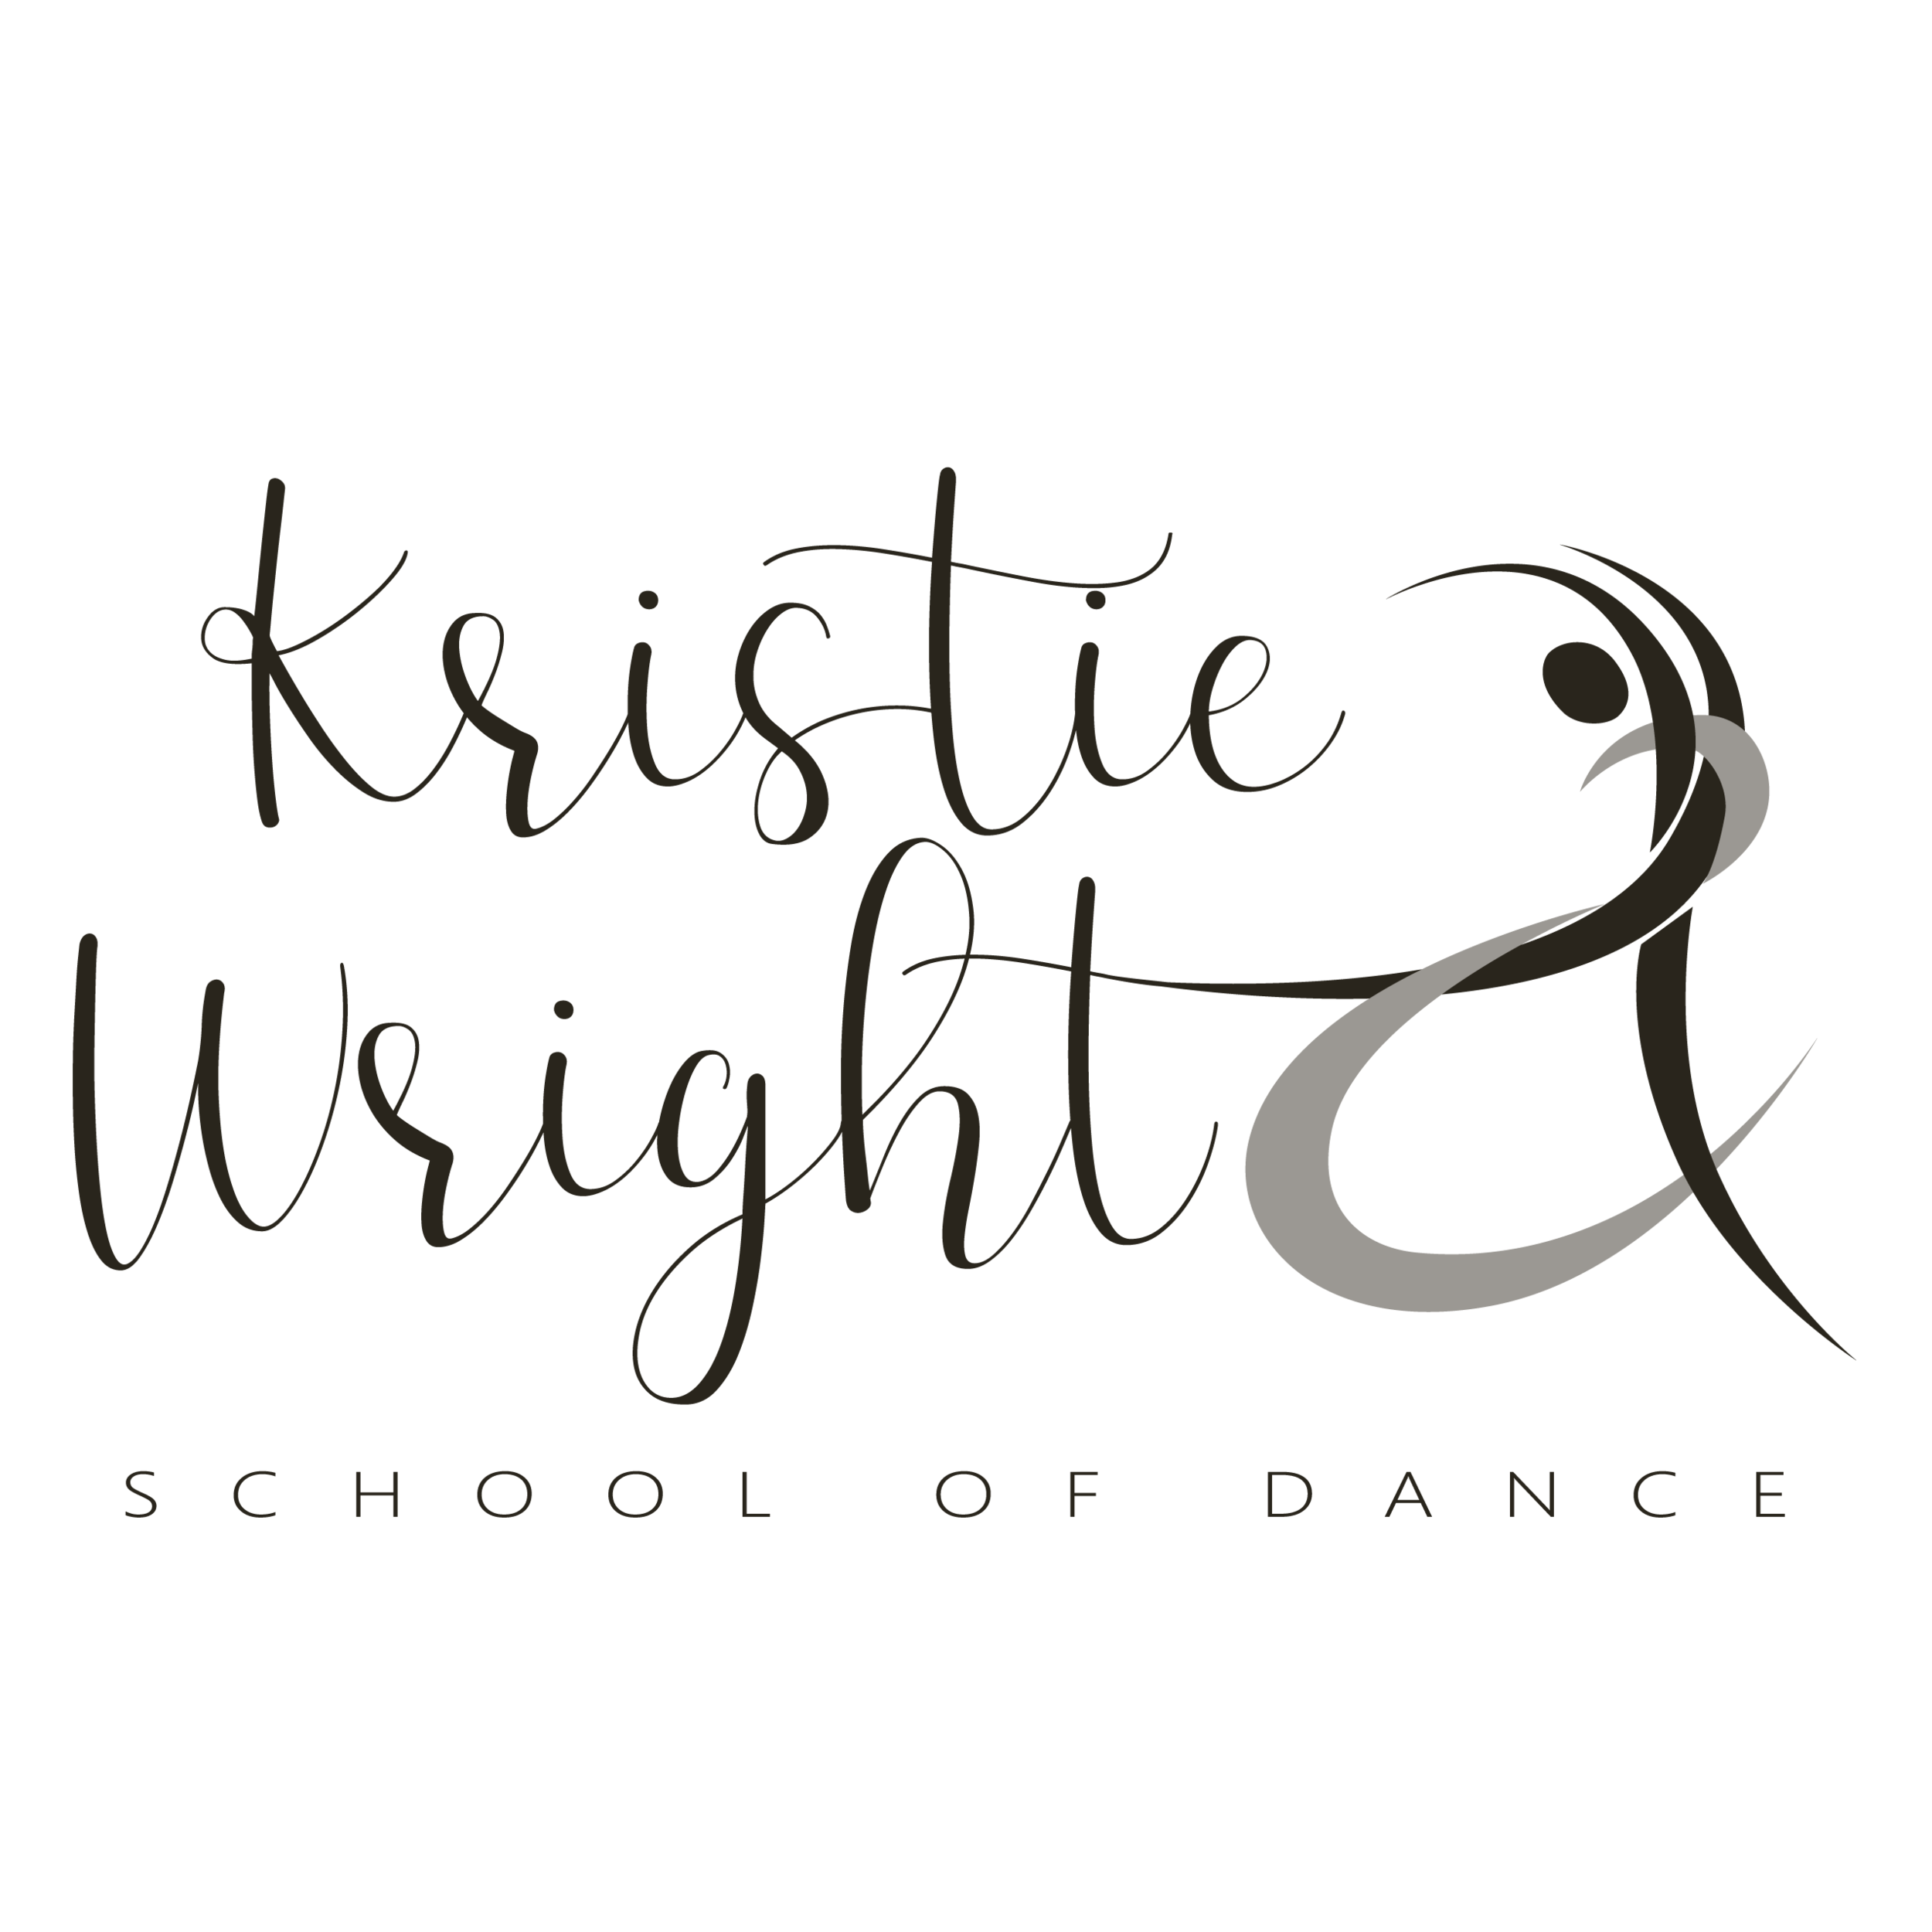 Kristie Wright School of Dance